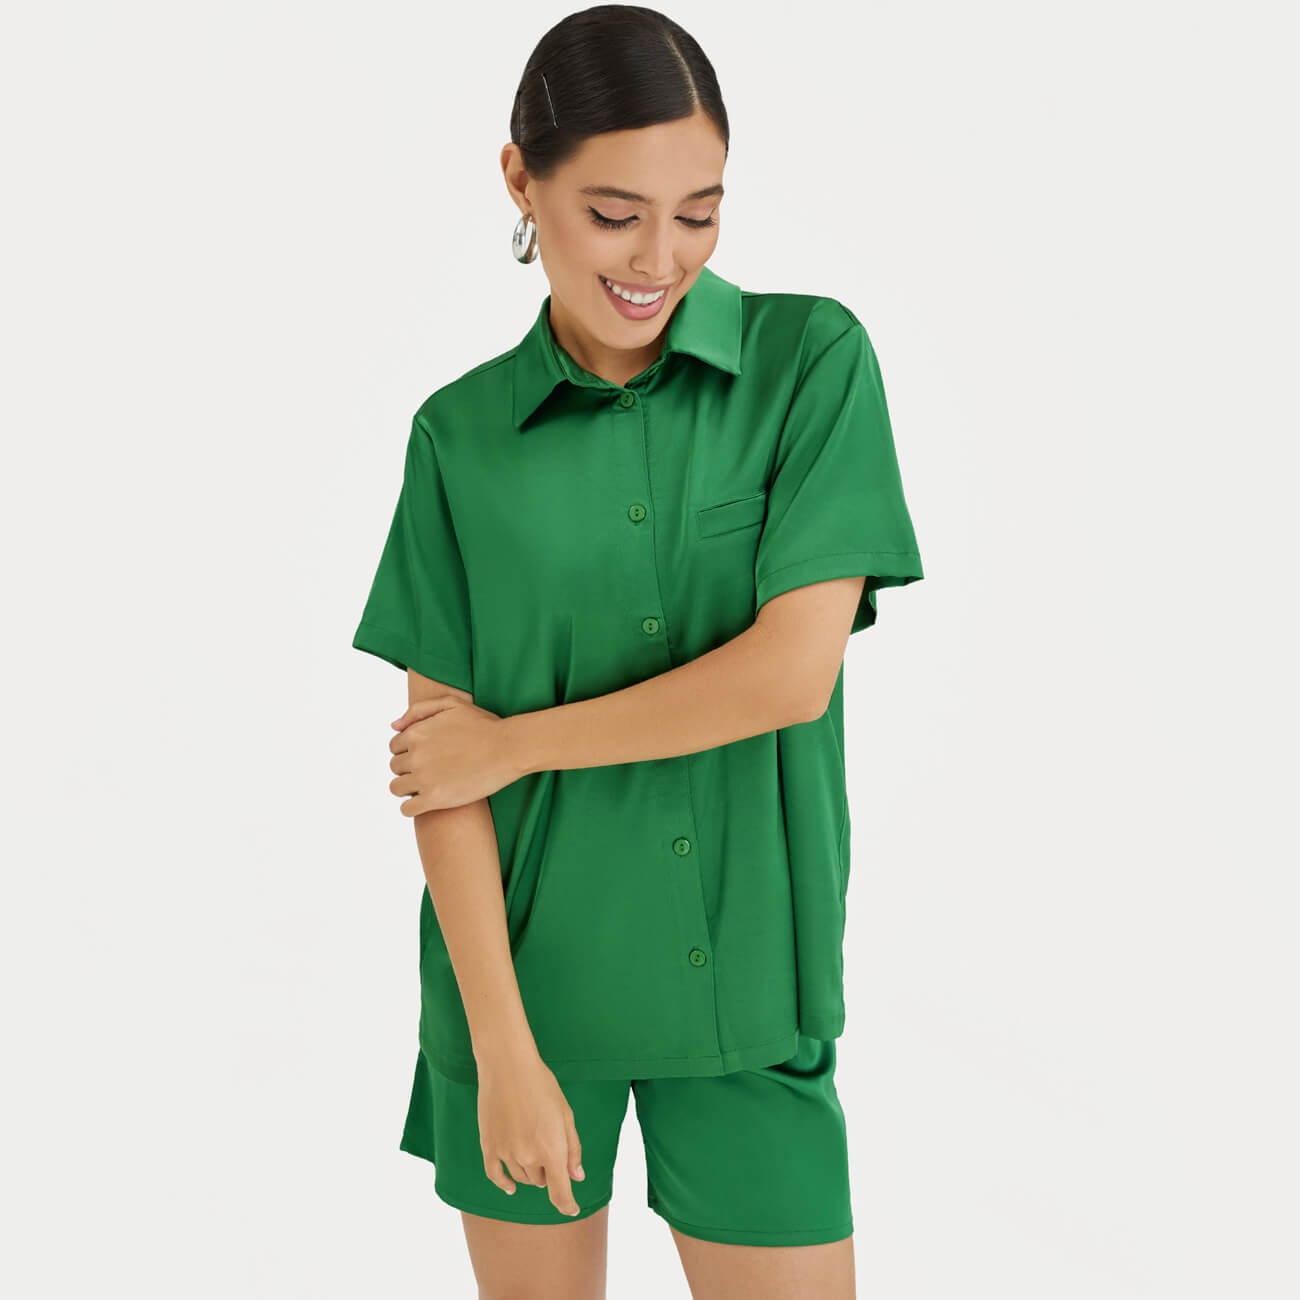 Рубашка женская, р. XL, с коротким рукавом, полиэстер/эластан, зеленая, Madeline рубашка женская домашняя р l с коротким рукавом полиэстер эластан серая ирисы mary